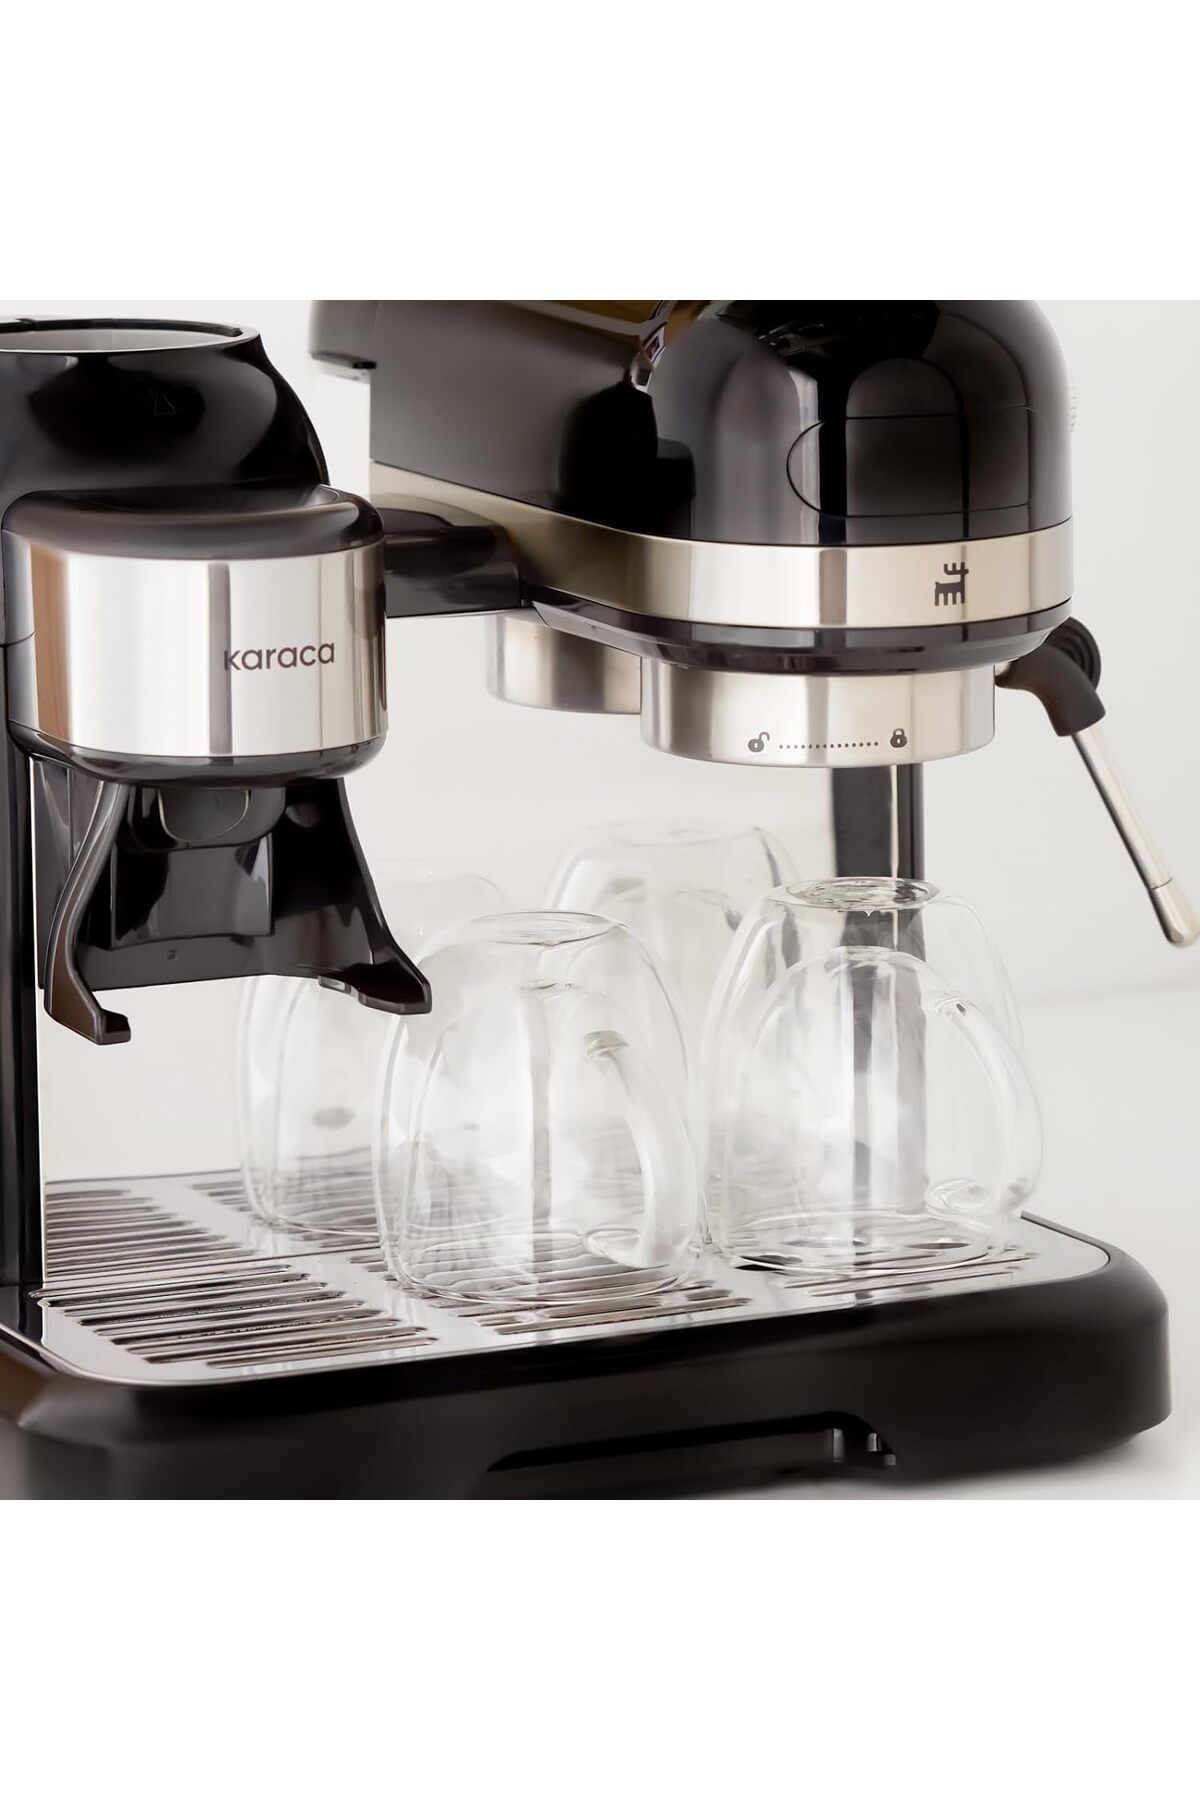 Karaca Kahve Öğütücülü, Süt Köpürtücülü, Espresso, Latte, Cappuccino, Americano Makinesi, 1.4L